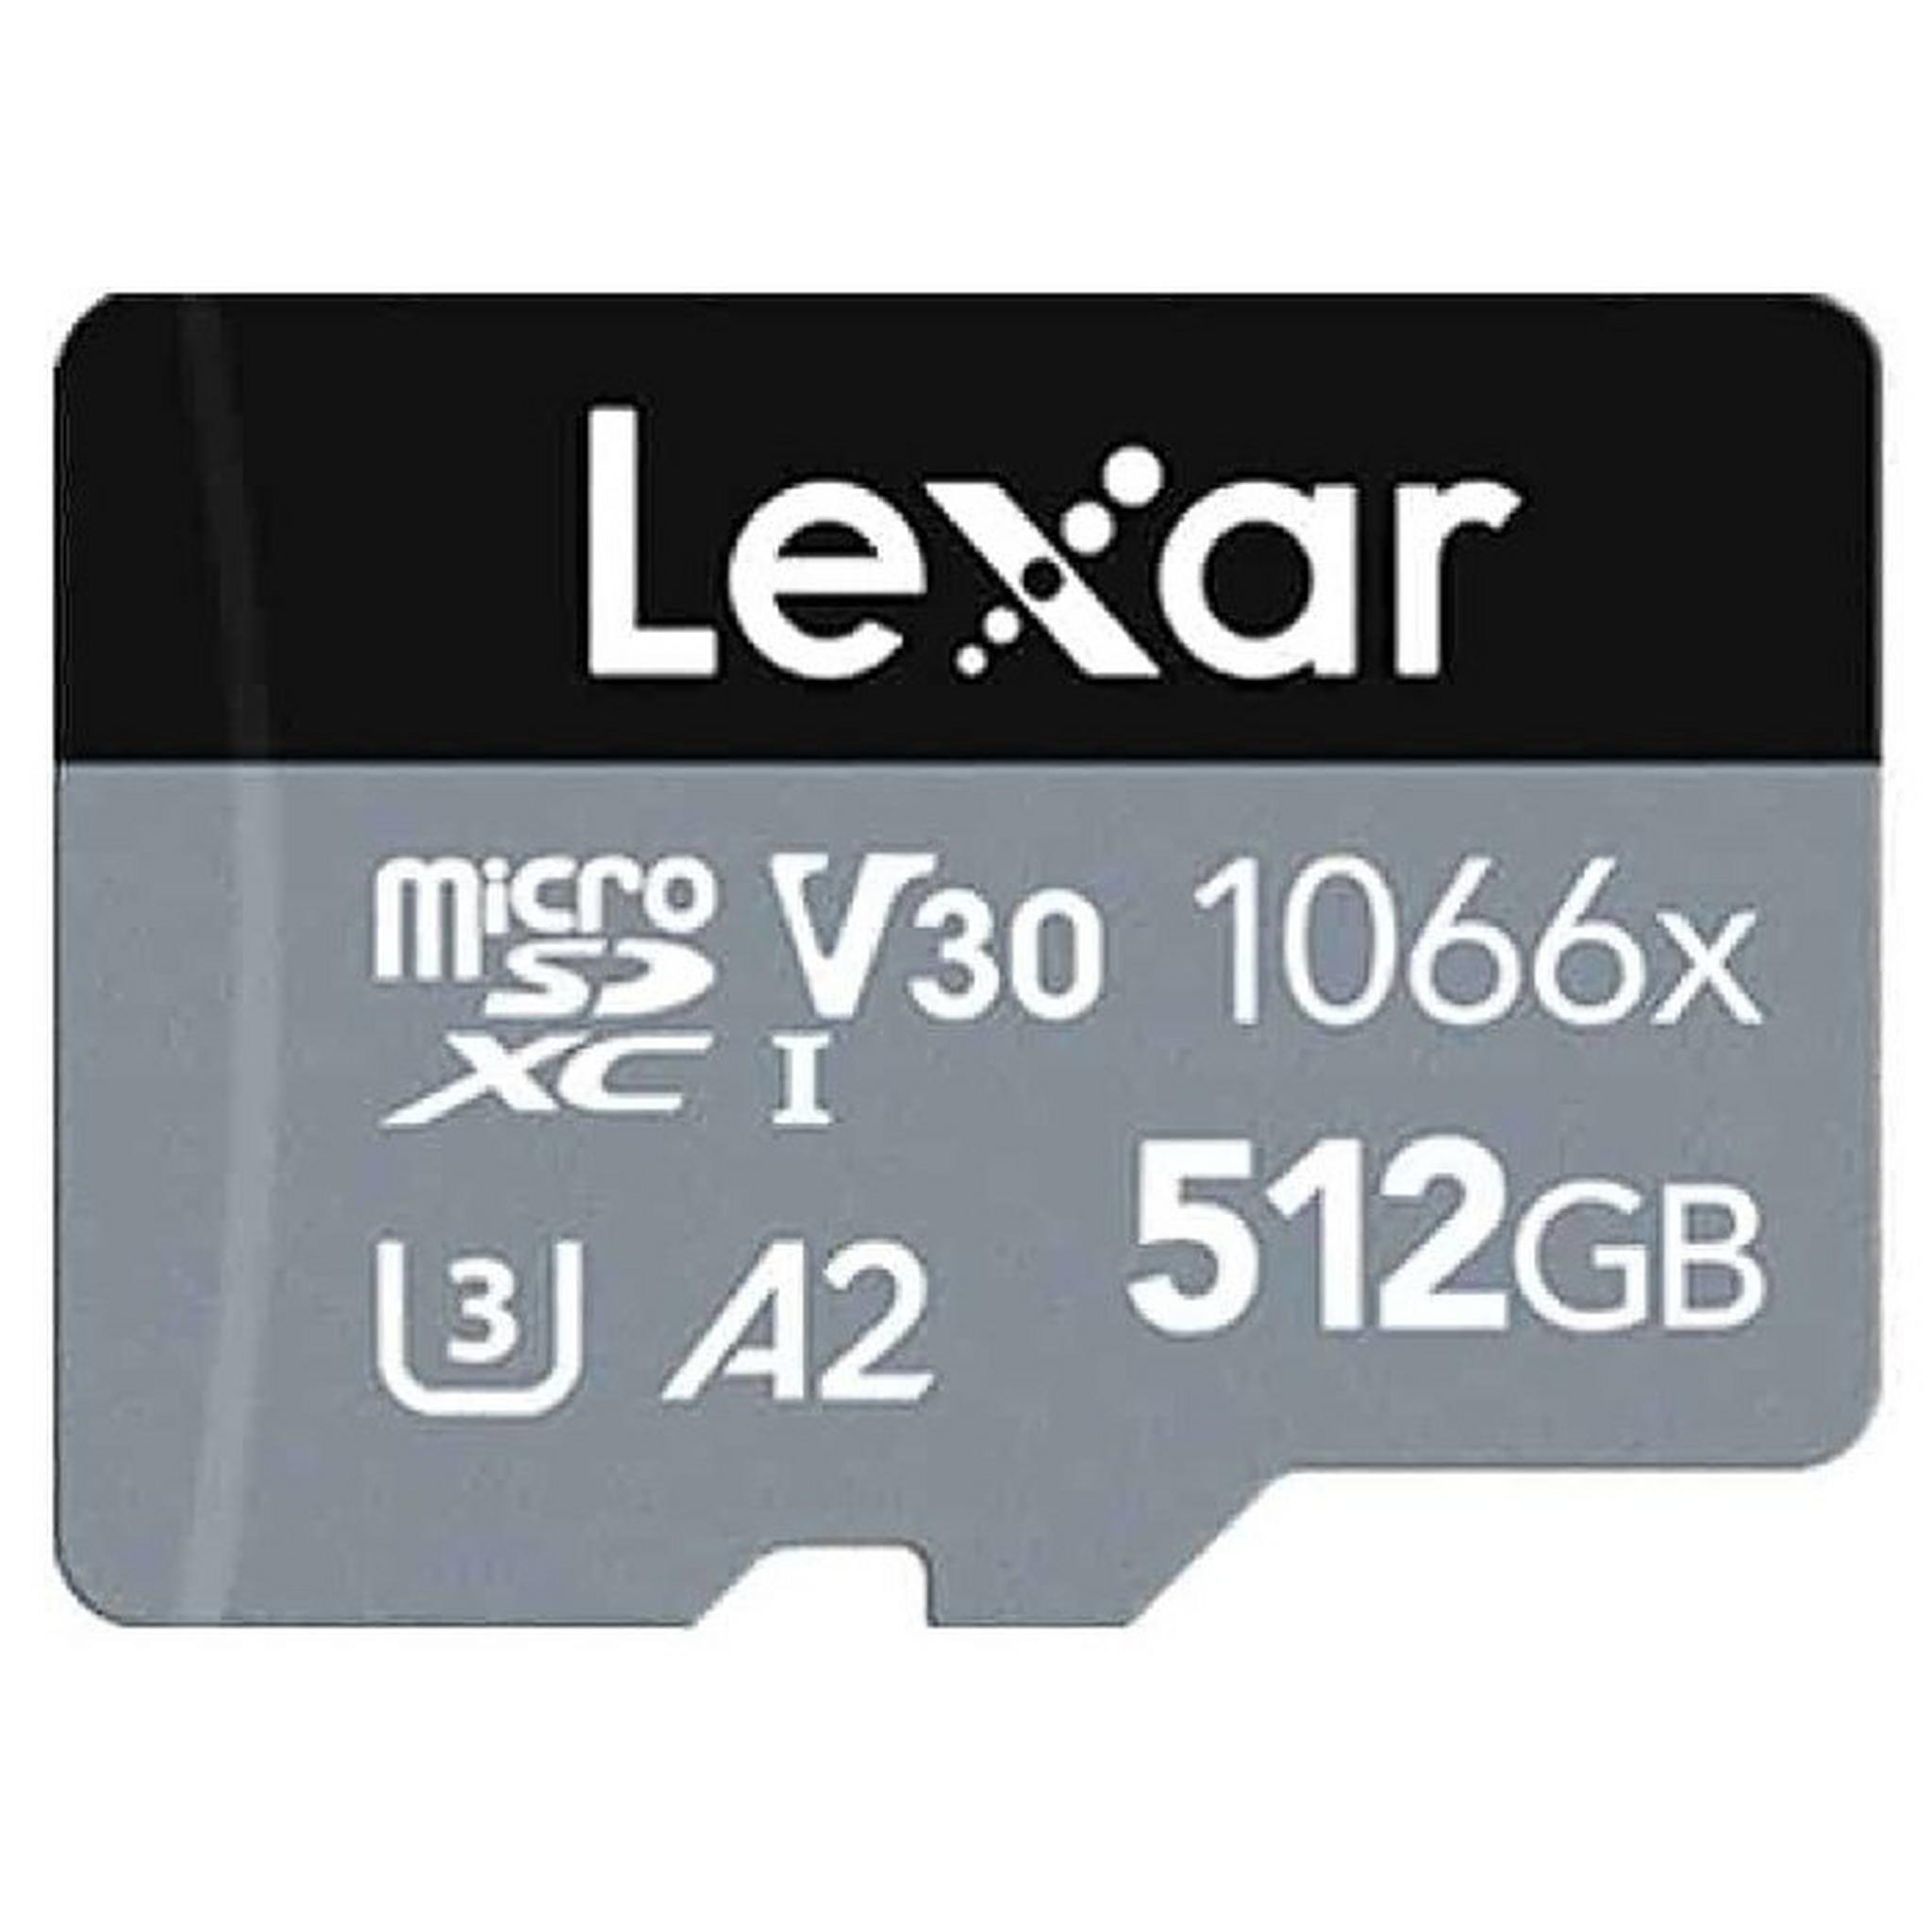 Lexar 1066x MicroSDXC UHS-I Card SILVER Series, LMS1066512G-BNANG